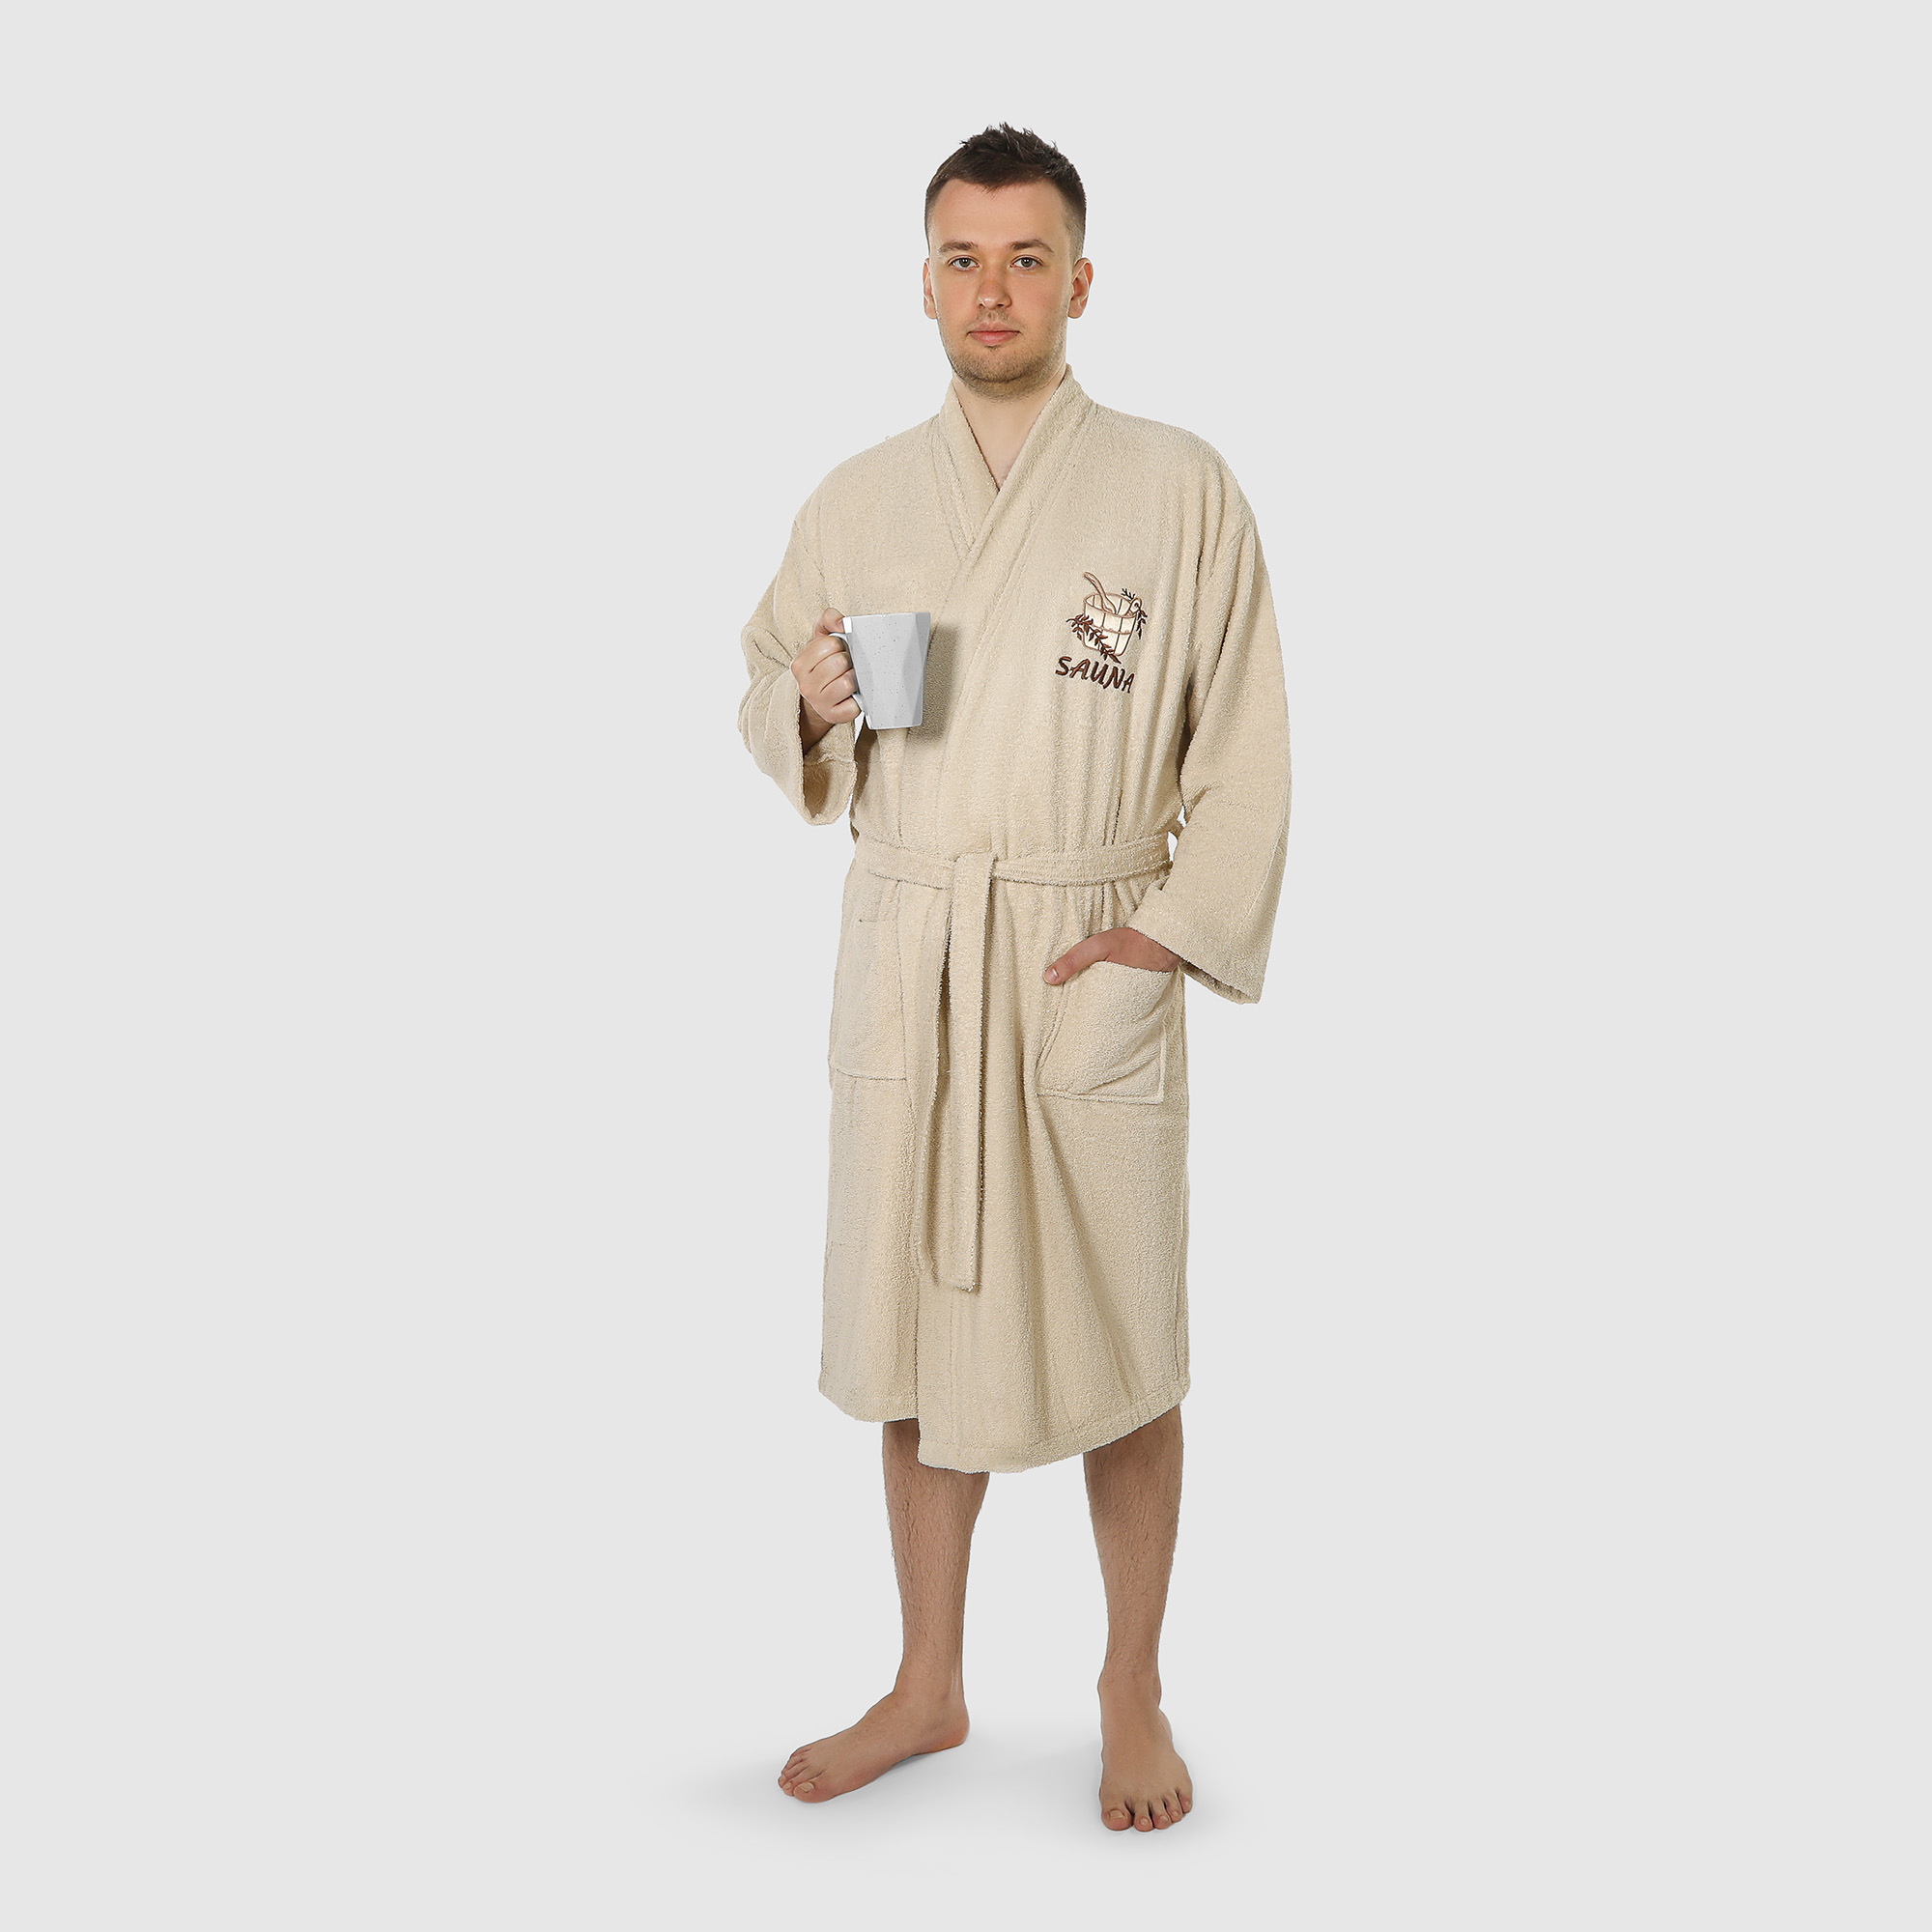 Халат мужской махровый Asil Sauna Kimono brown XL халат мужской asil sauna brown xl махровый с капюшоном